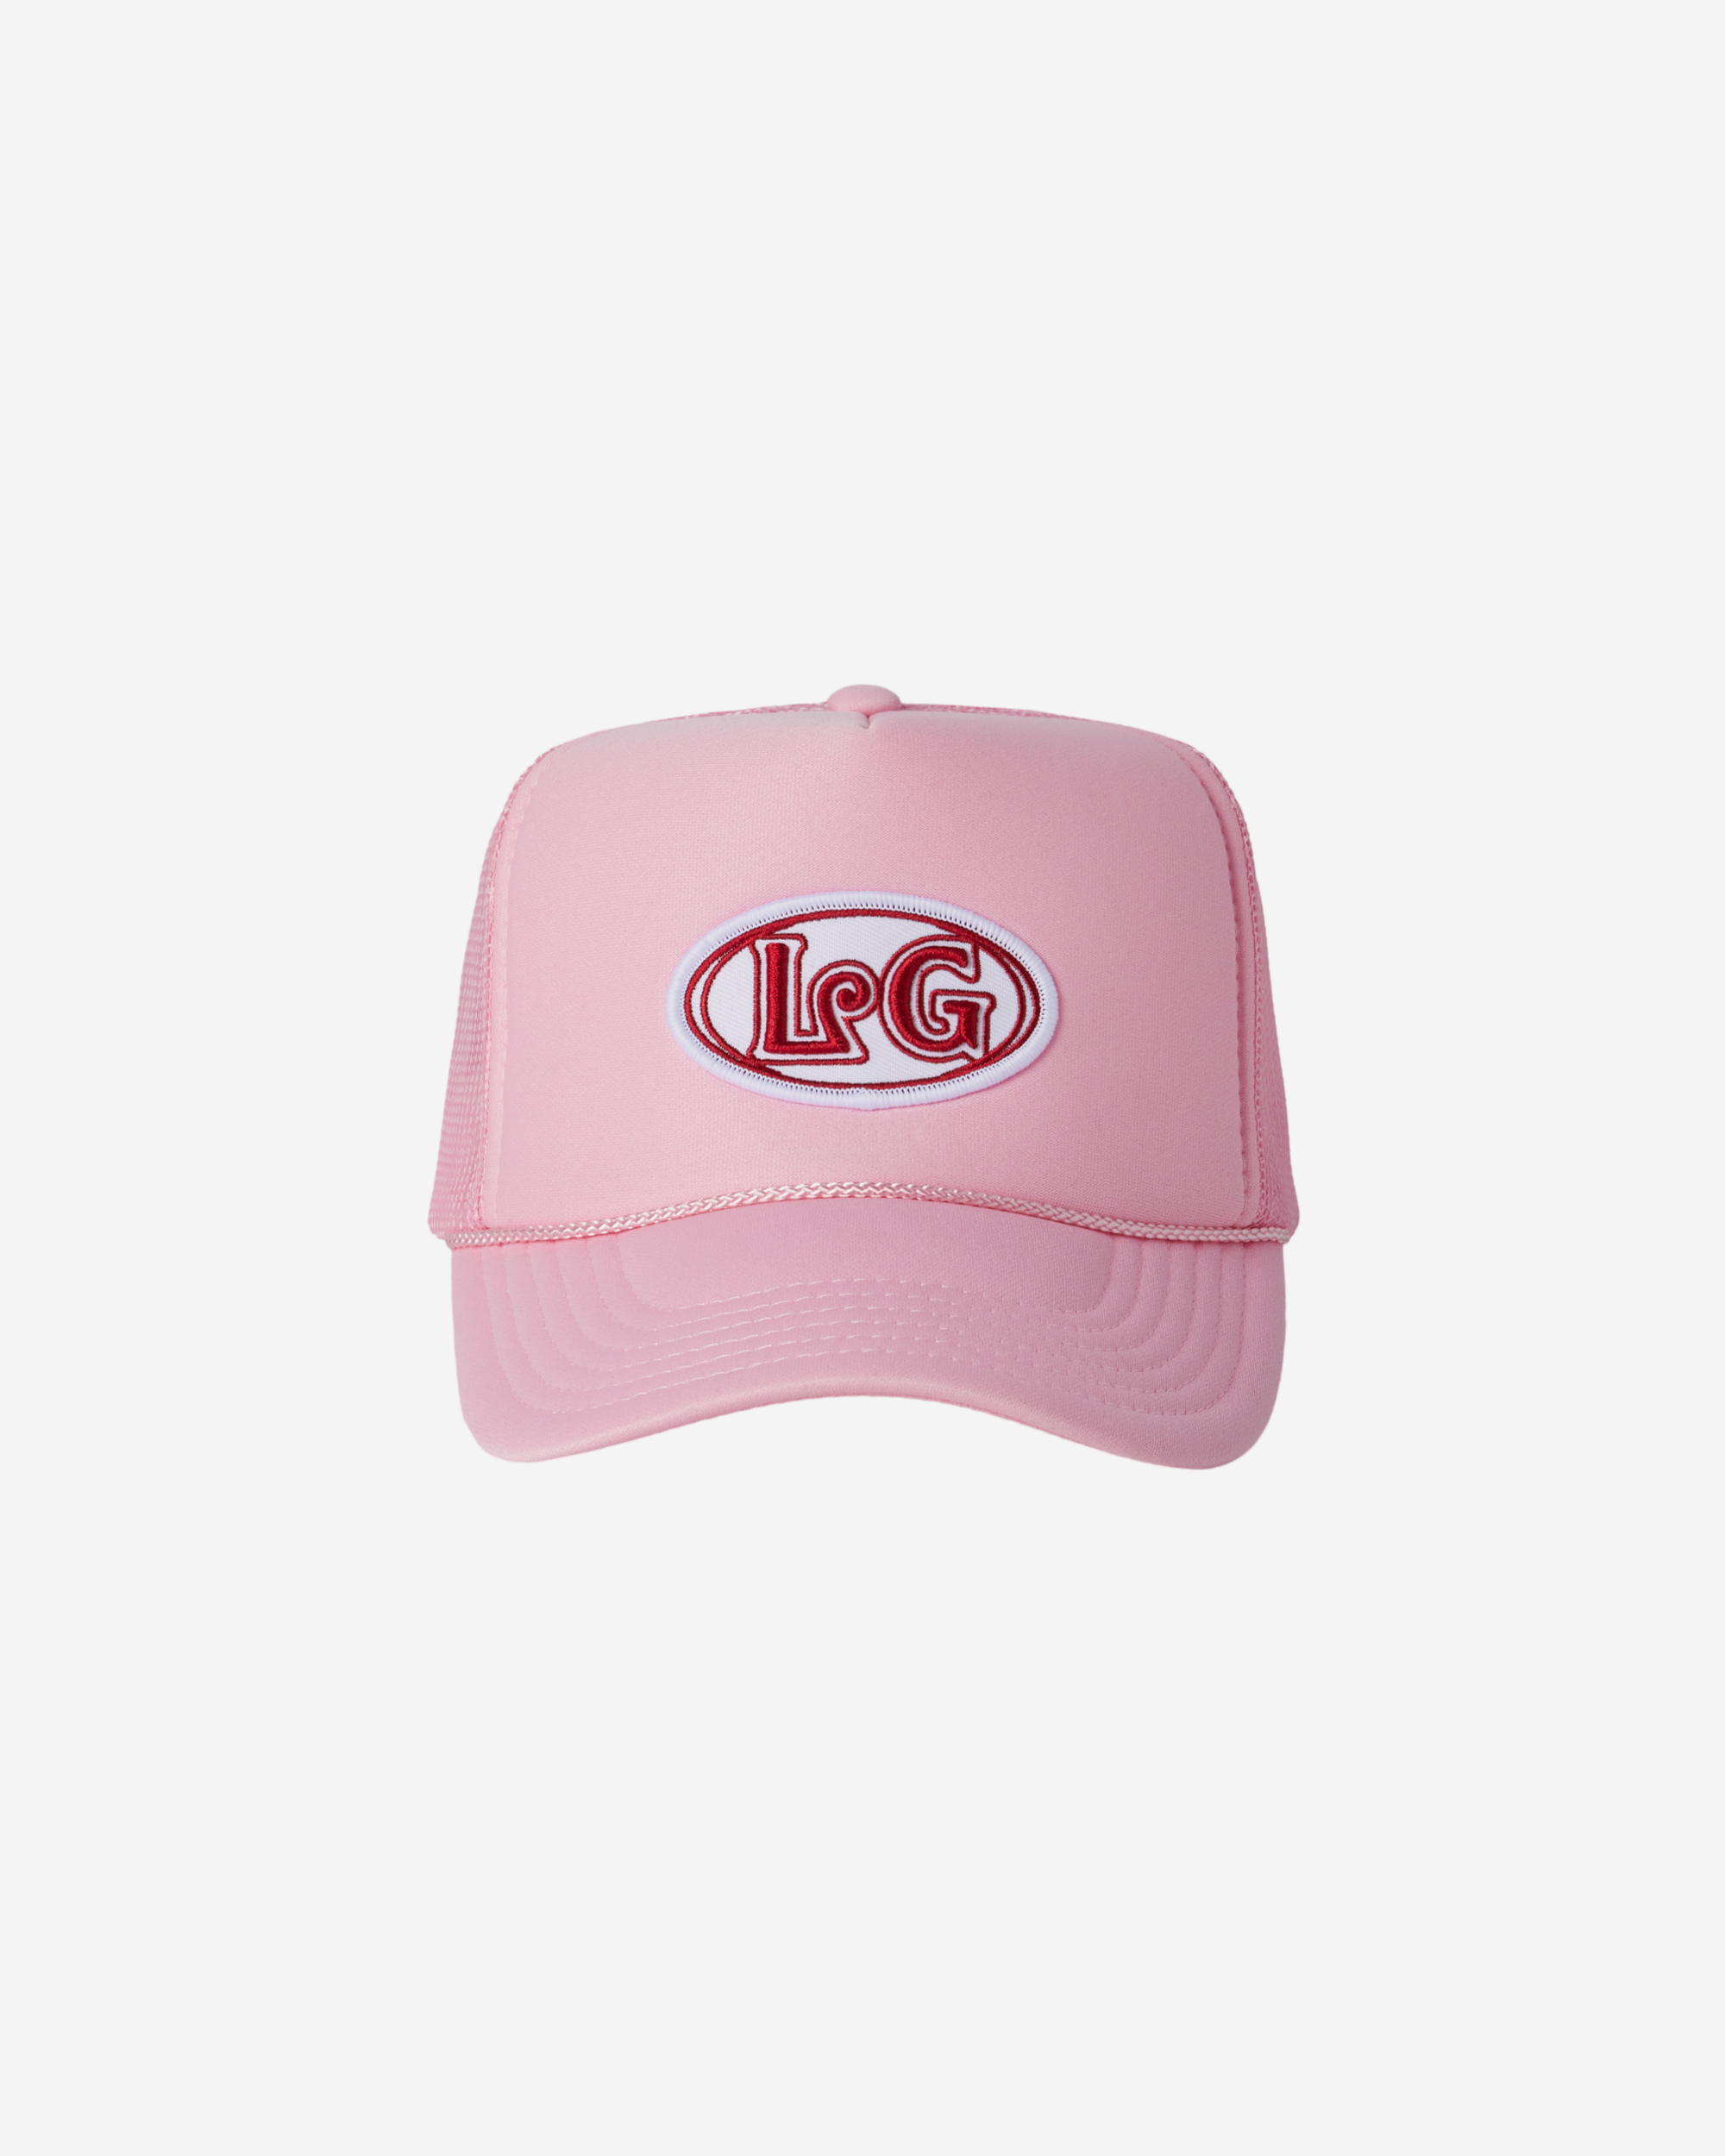 LG Candy Trucker Hat